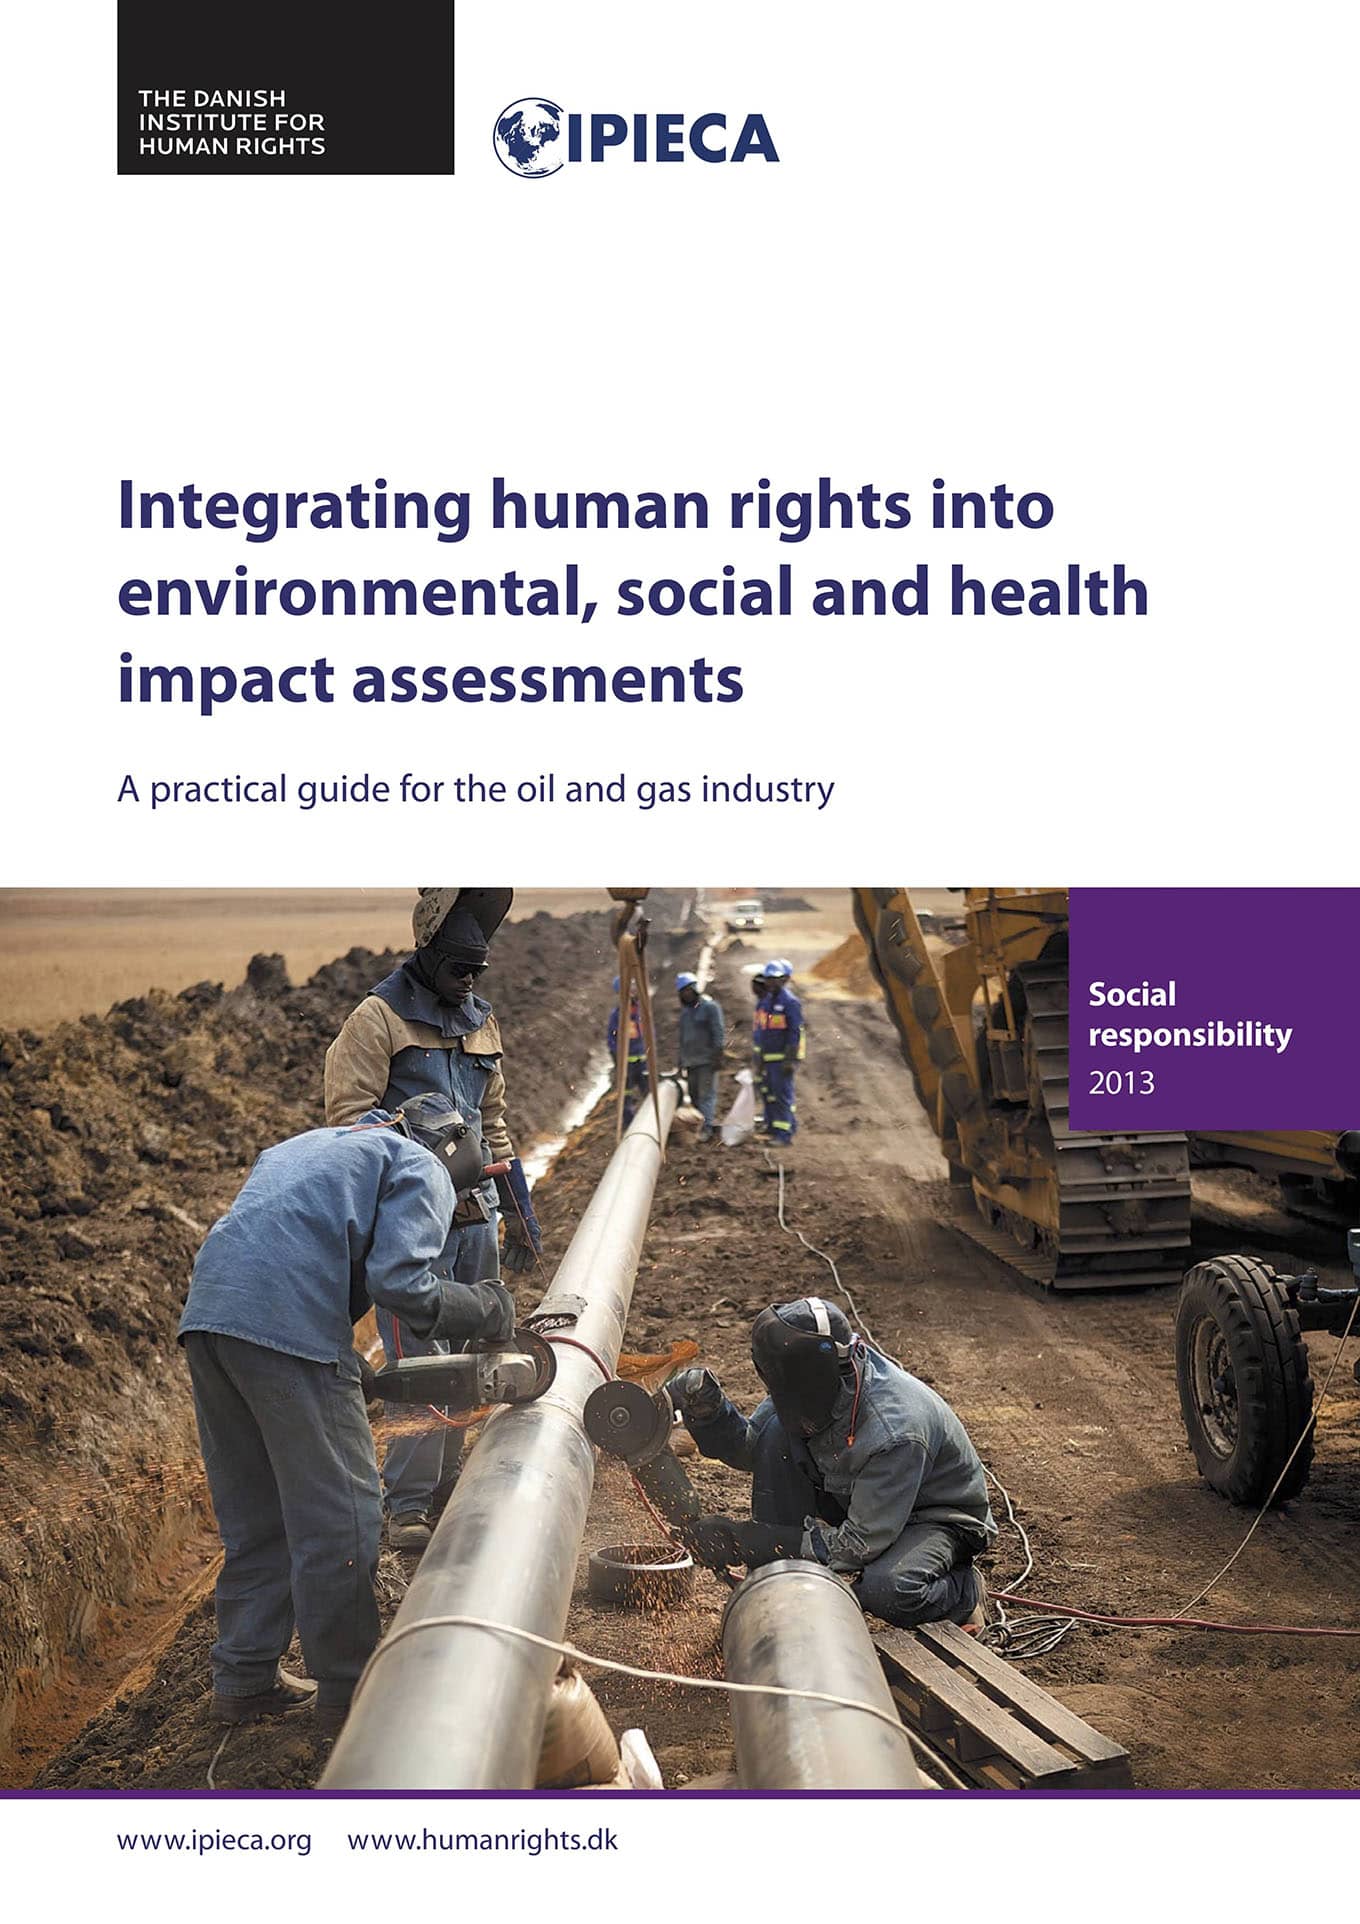 Integrating Human Rights into Environmental, Social and Health Impact Assessments (IPIECA, 2013)